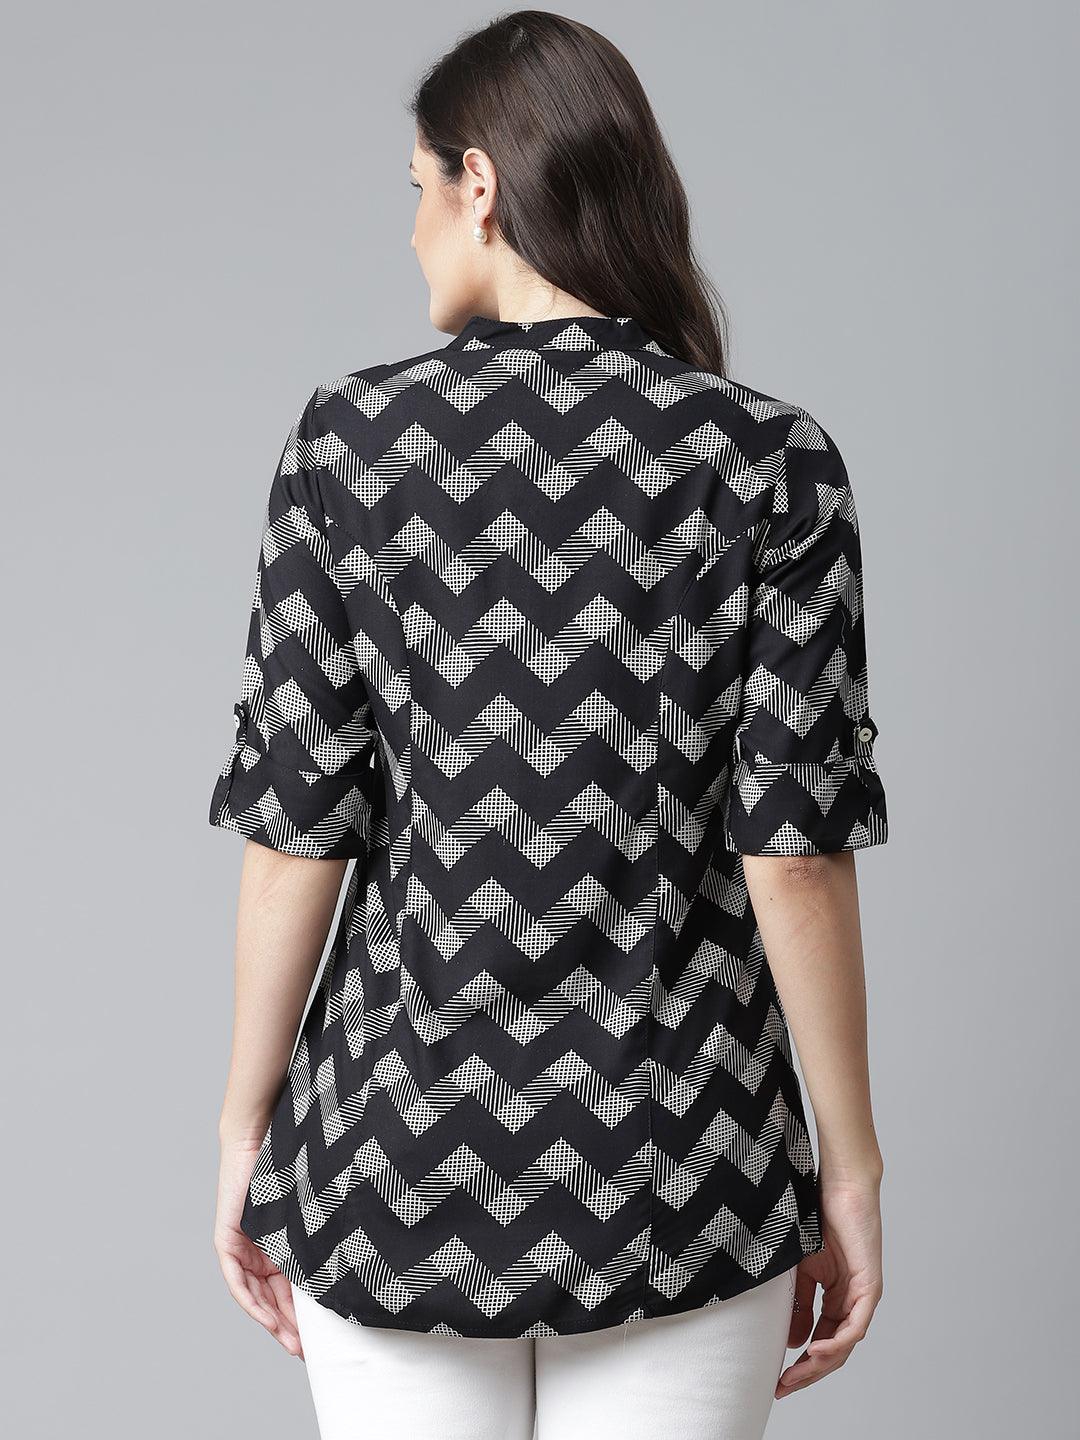 Divena Black Rayon Zigzag Print Shirts Style Top - divena world